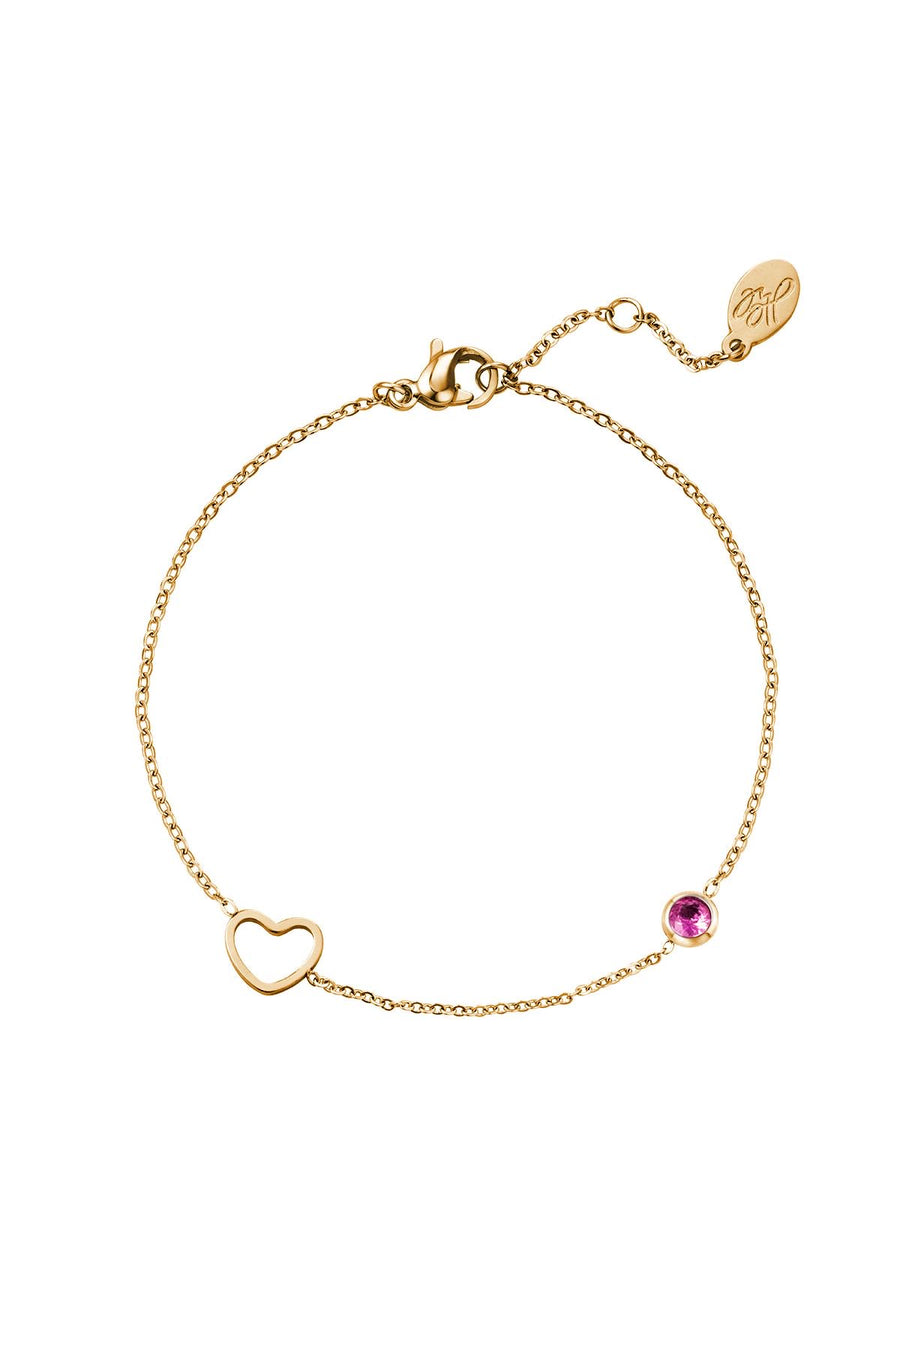 July/Coral Ruby Birthstone Bracelet